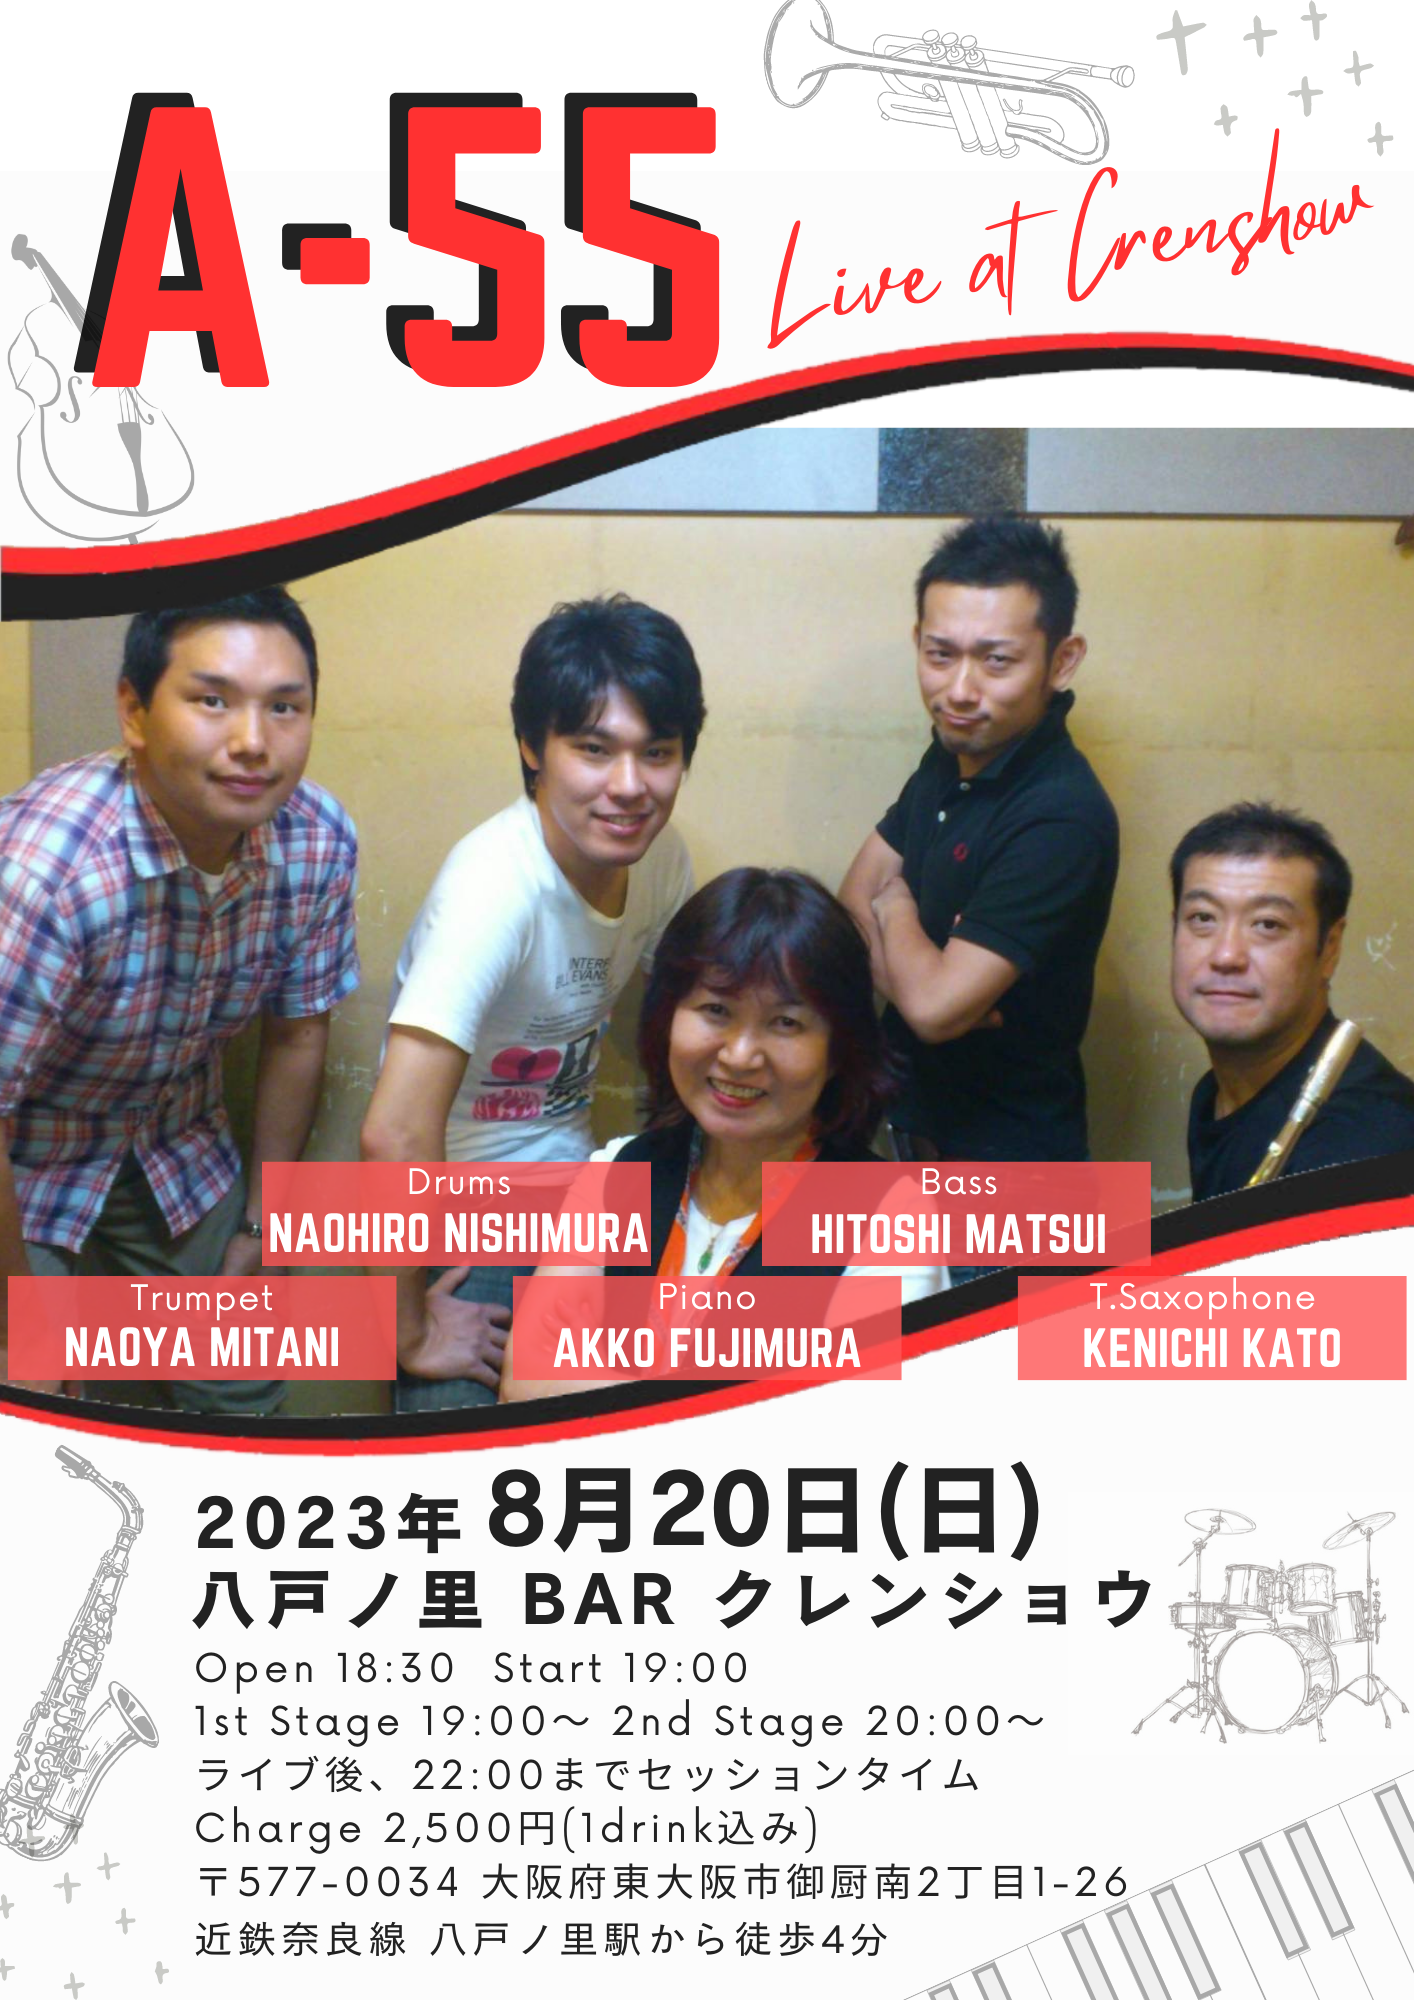 【Live】(Jazz)A-55